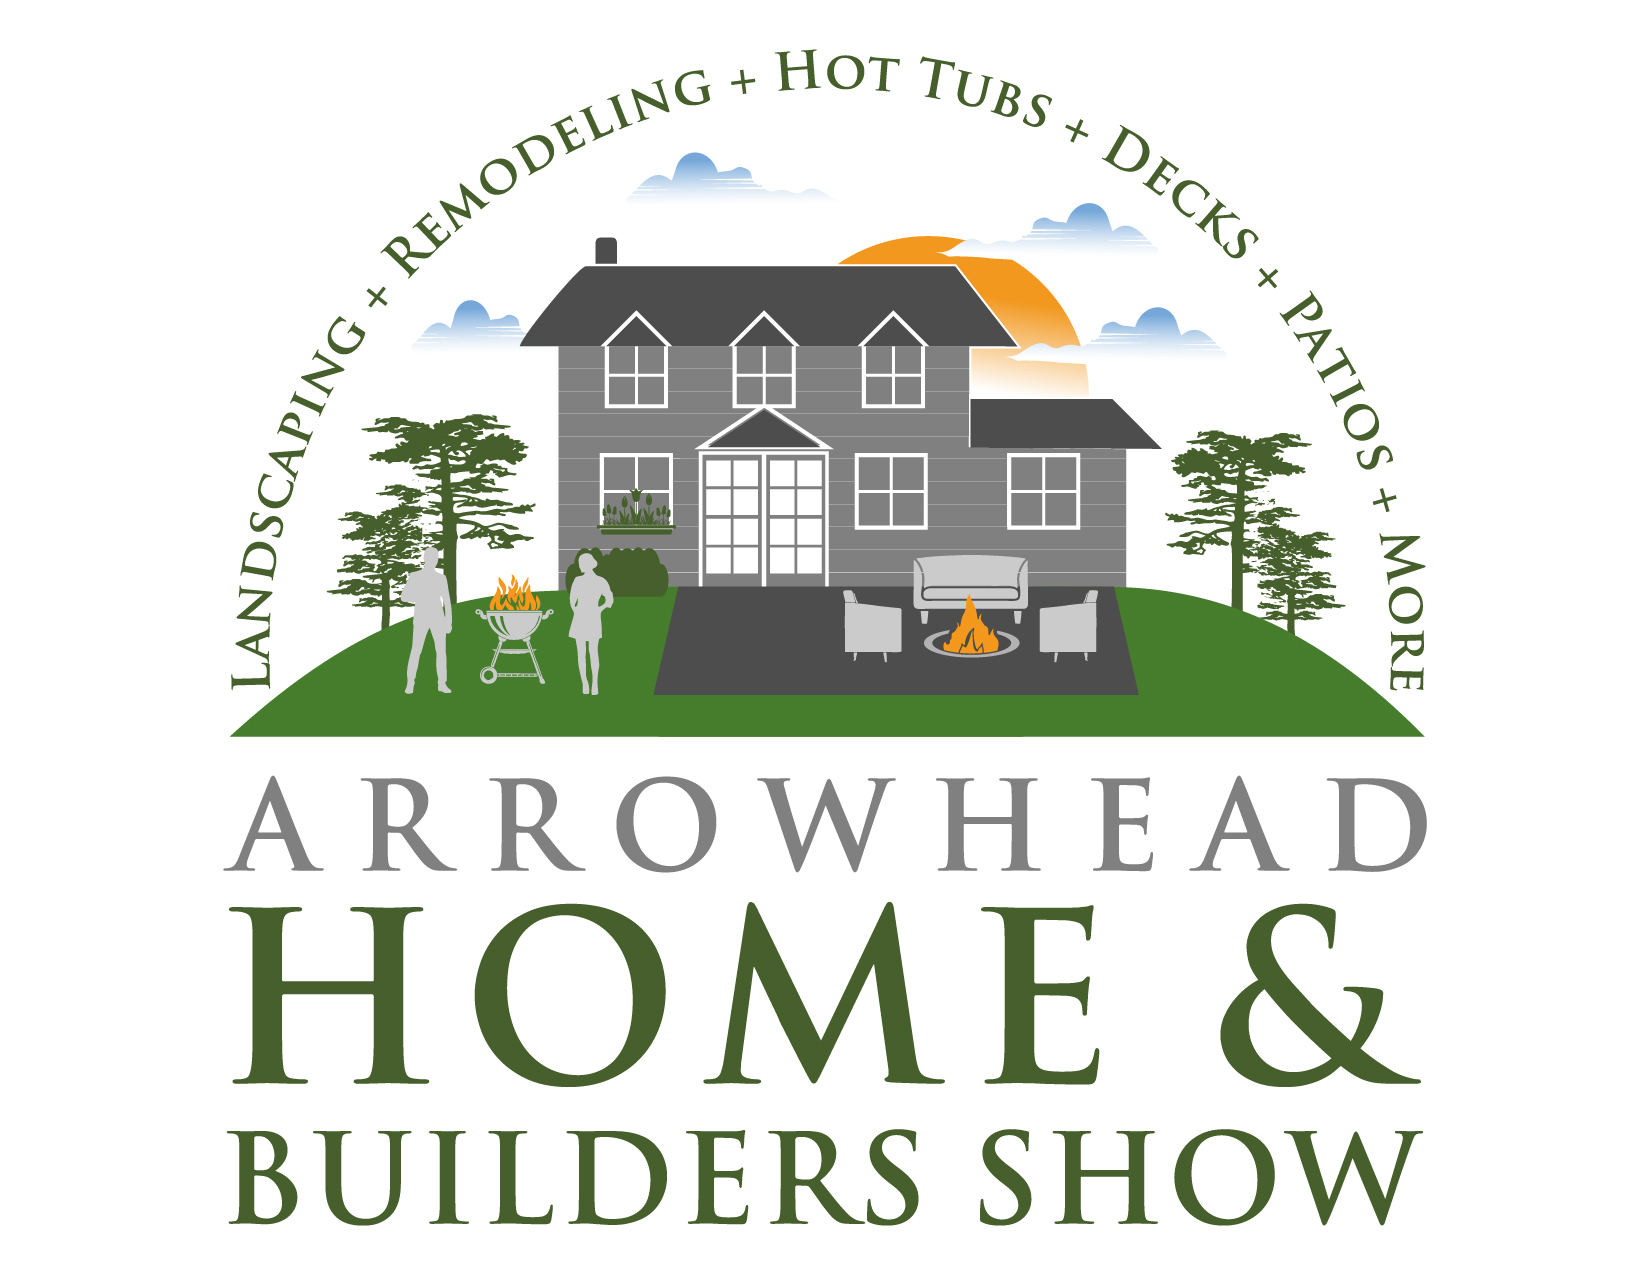 Arrowhead Home & Builders Show